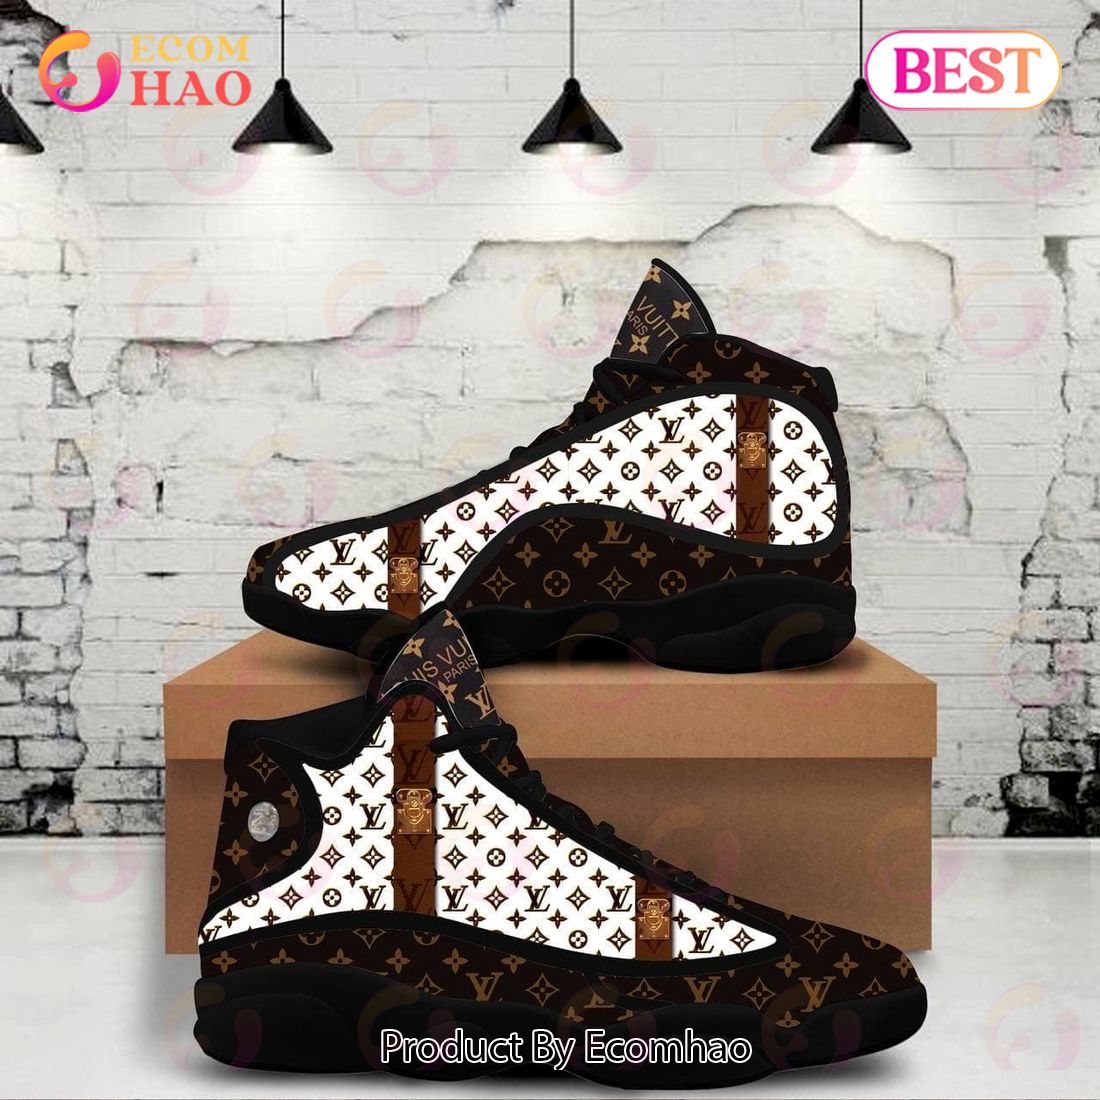 Louis Vuitton Black White Air Jordan 11 Shoes Hot 2022 LV Sneakers Gifts  Unisex